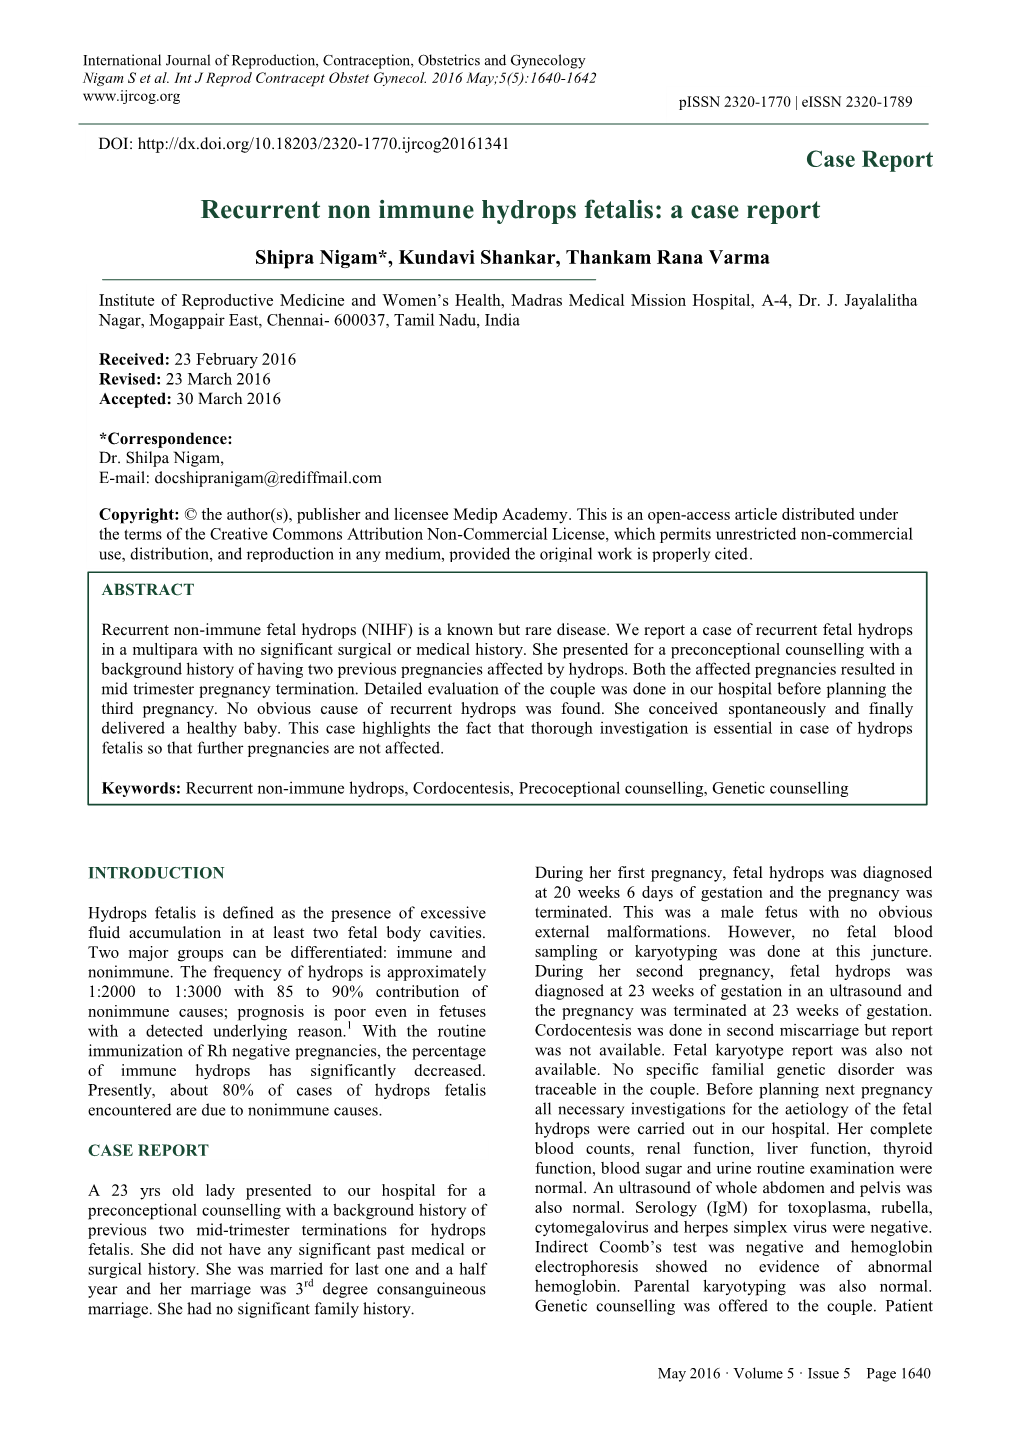 Recurrent Non Immune Hydrops Fetalis: a Case Report